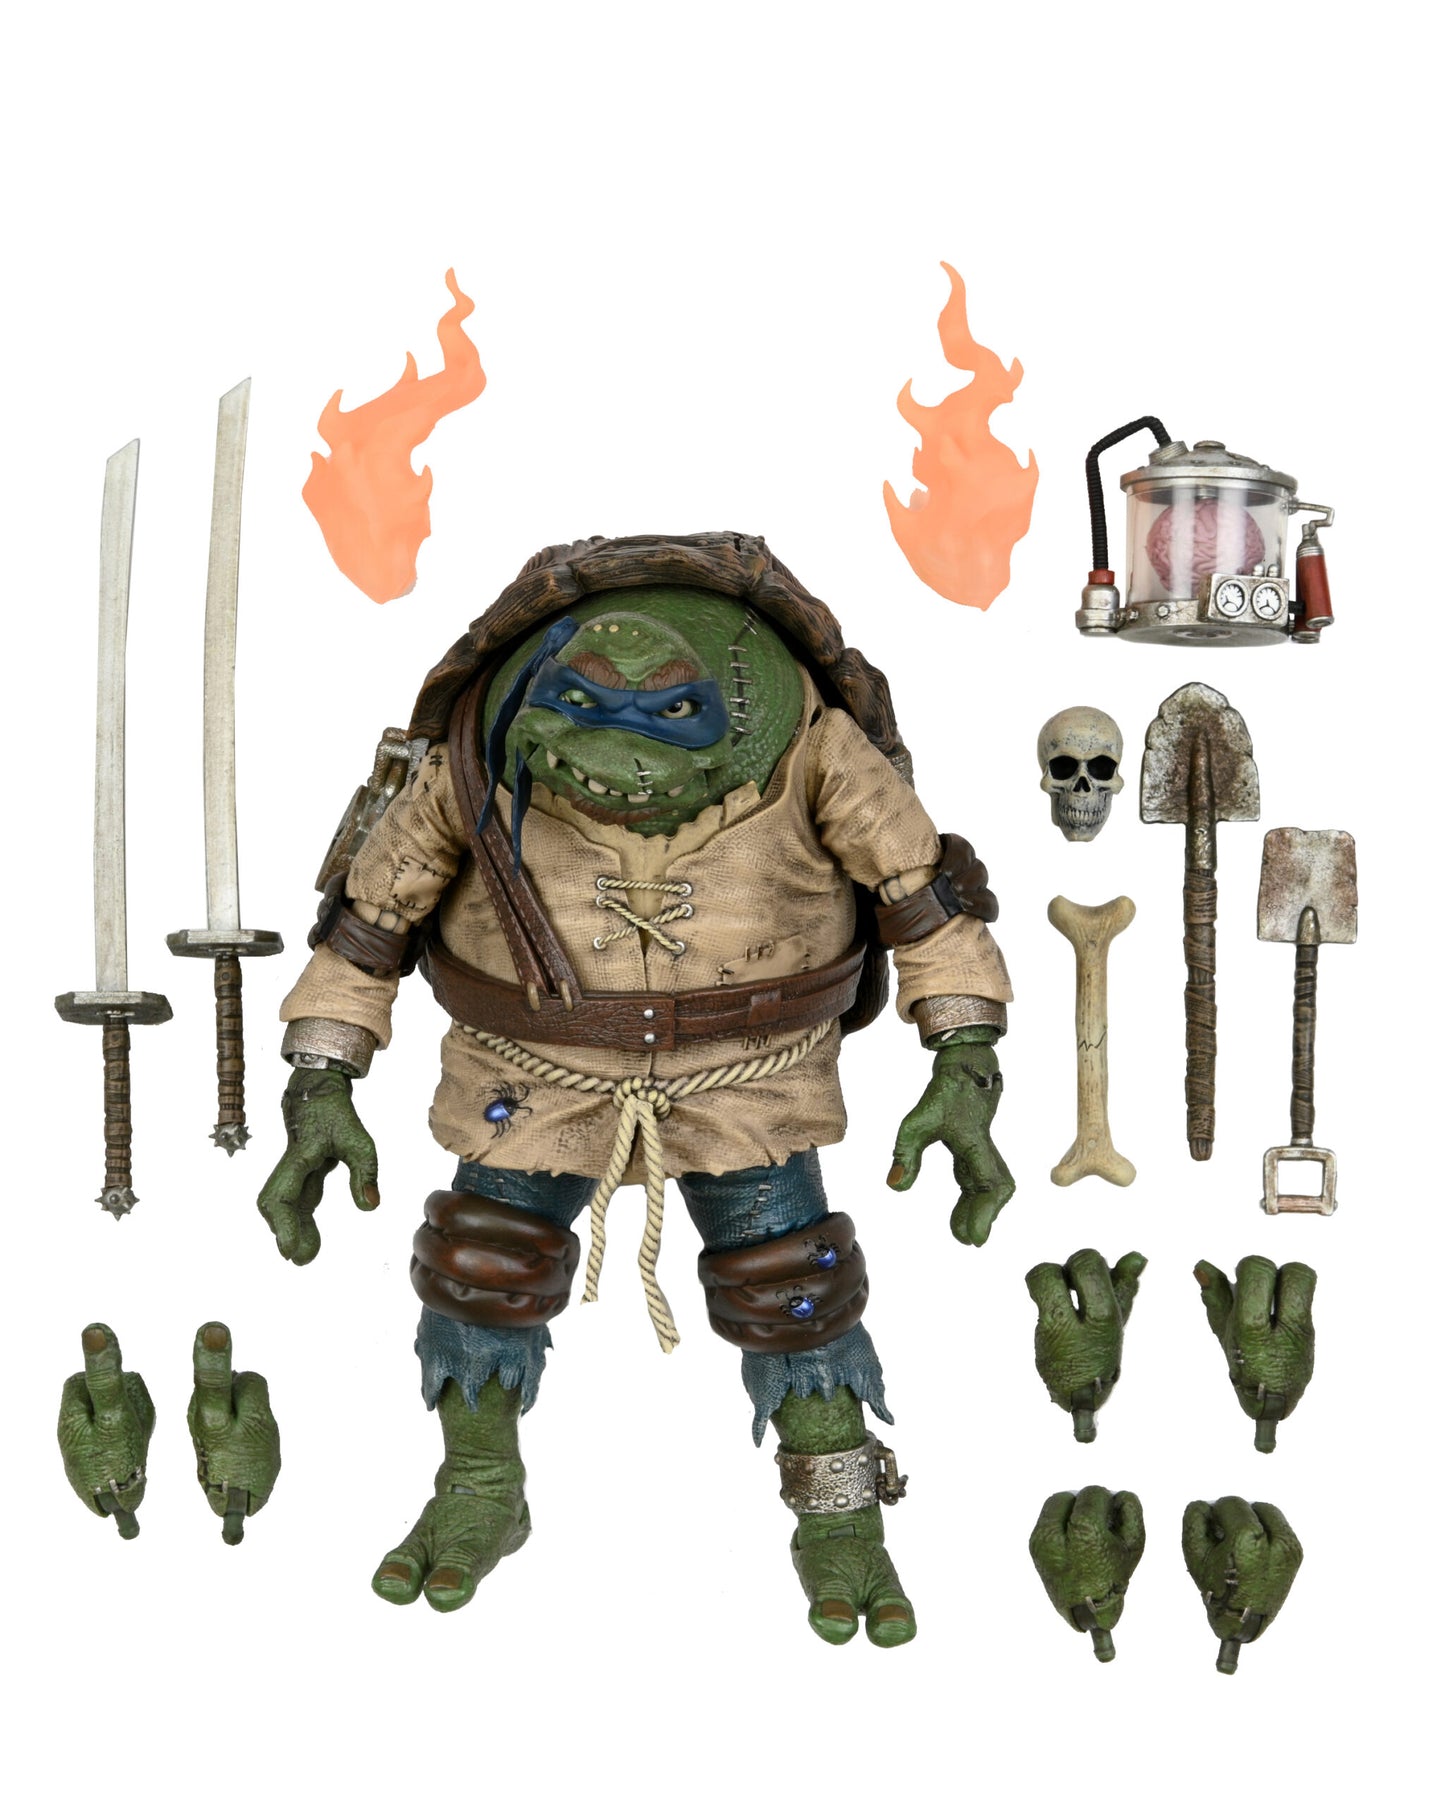 Universal Monsters x Teenage Mutant Ninja Turtles 7” Scale Action Figure – Ultimate Leonardo as The Hunchback